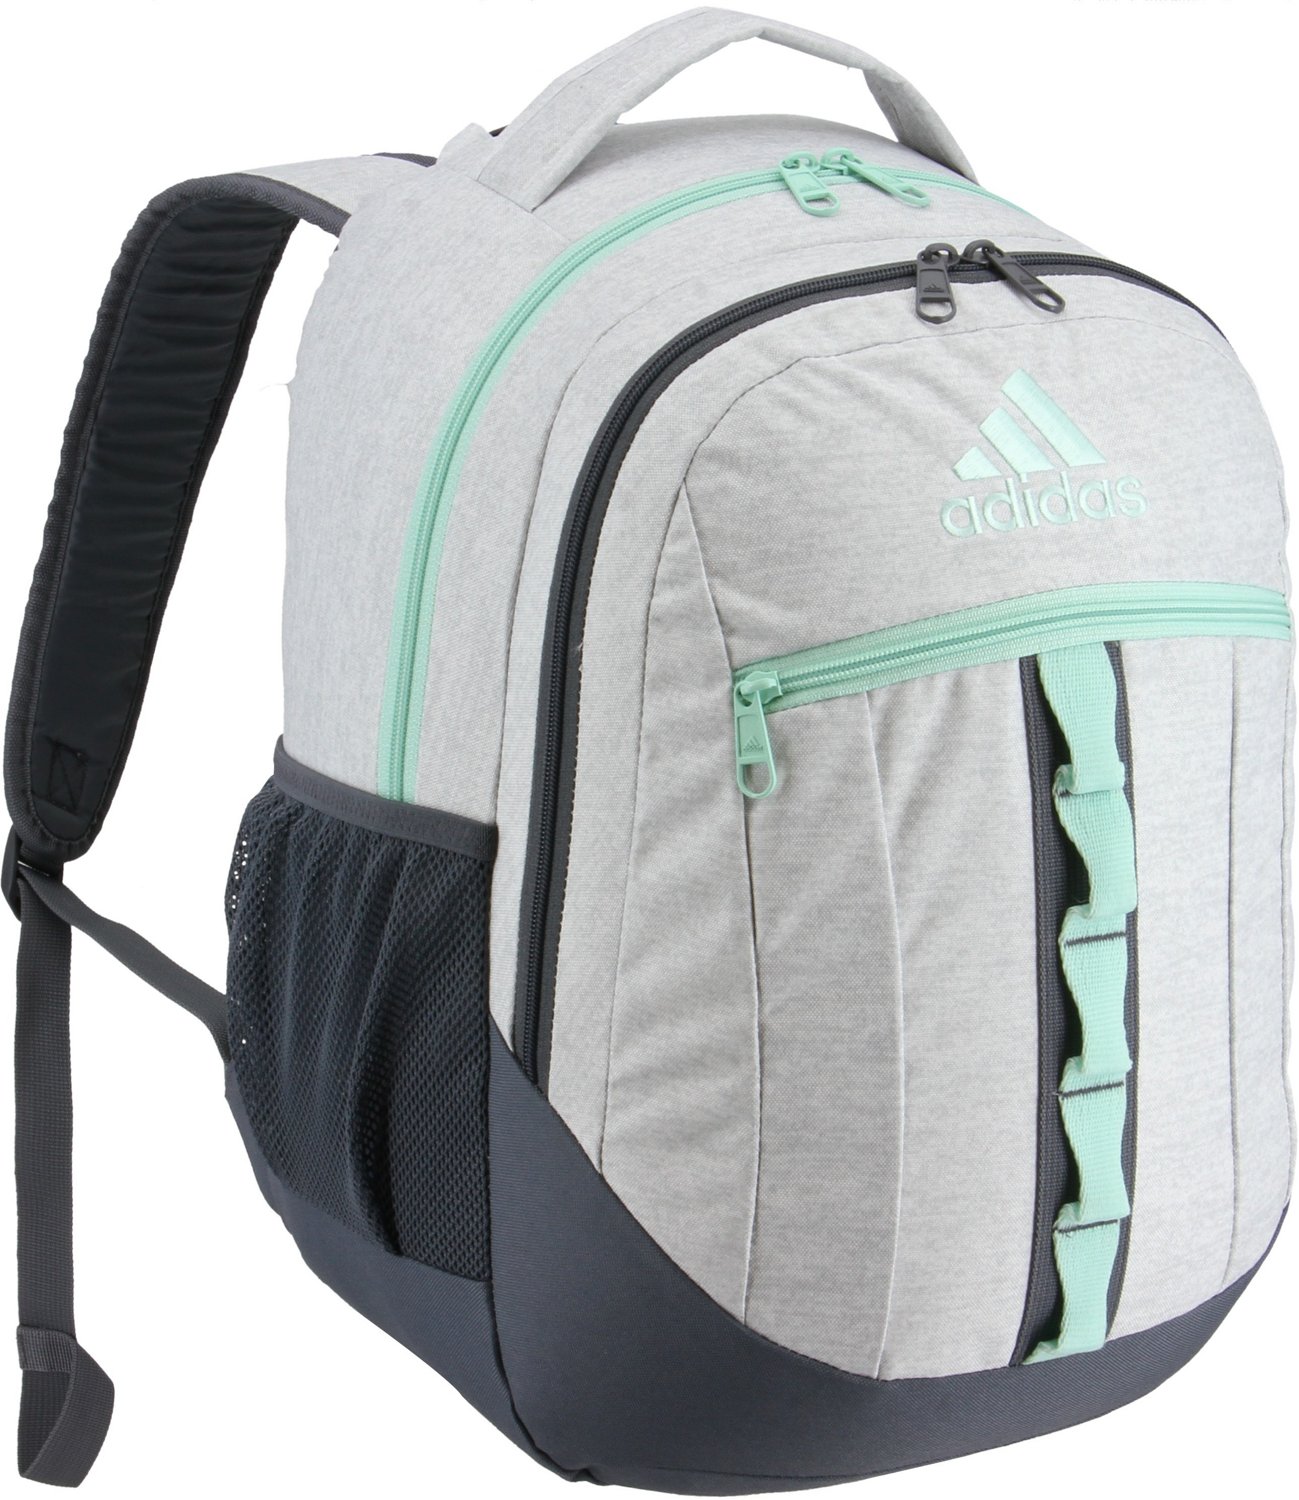 Adidas Stratton II Backpack Jersey 